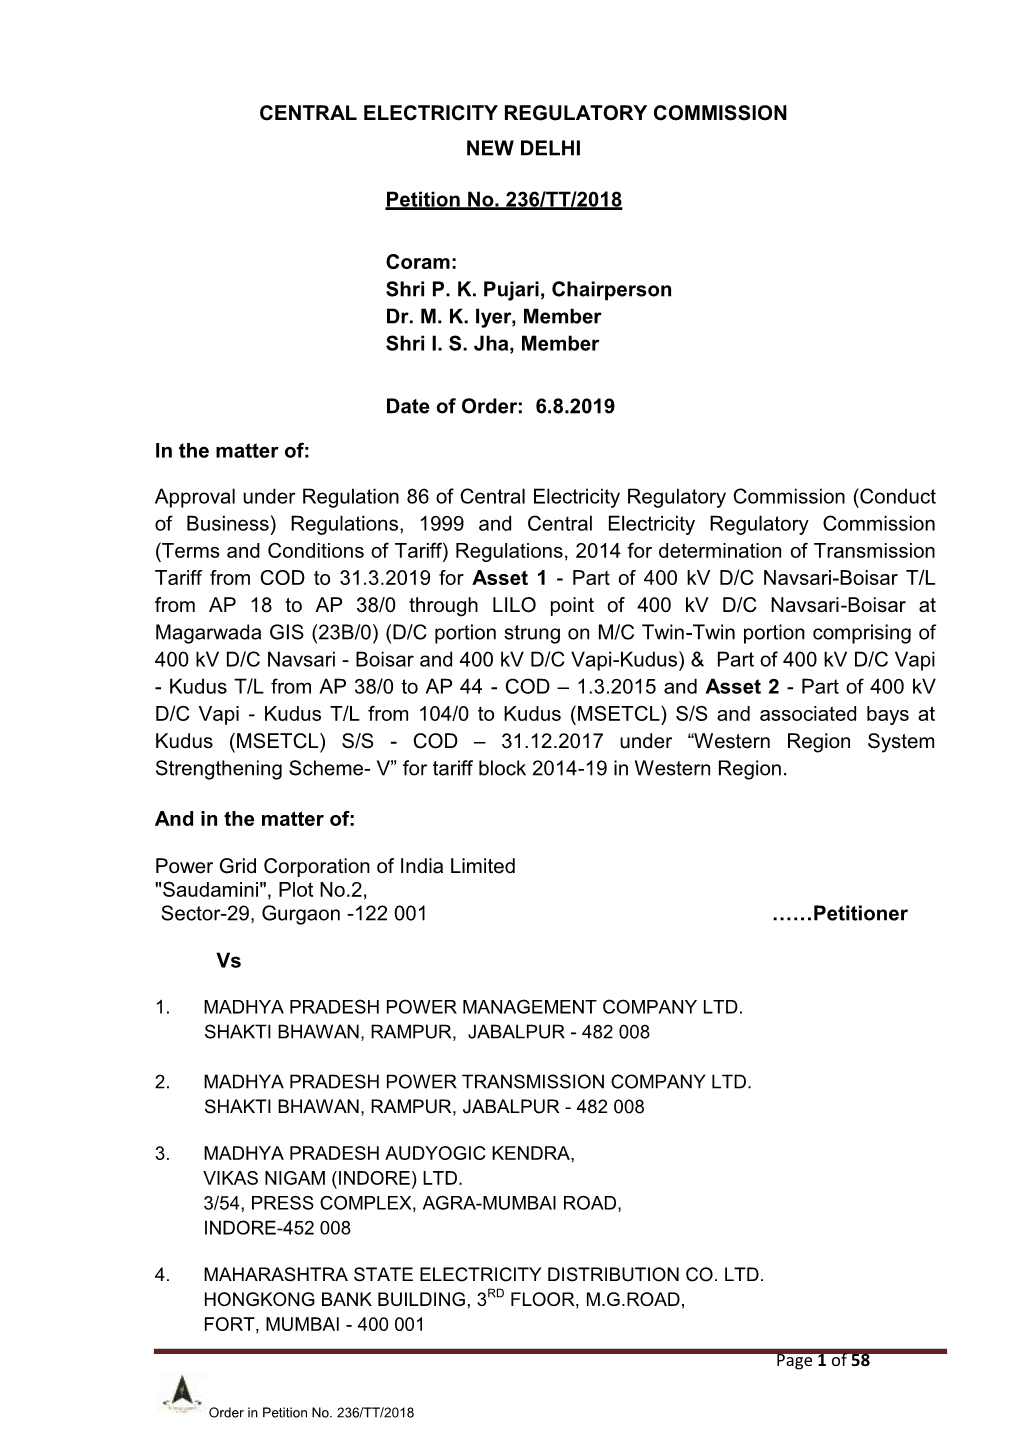 CENTRAL ELECTRICITY REGULATORY COMMISSION NEW DELHI Petition No. 236/TT/2018 Coram: Shri P. K. Pujari, Chairperson Dr. M. K